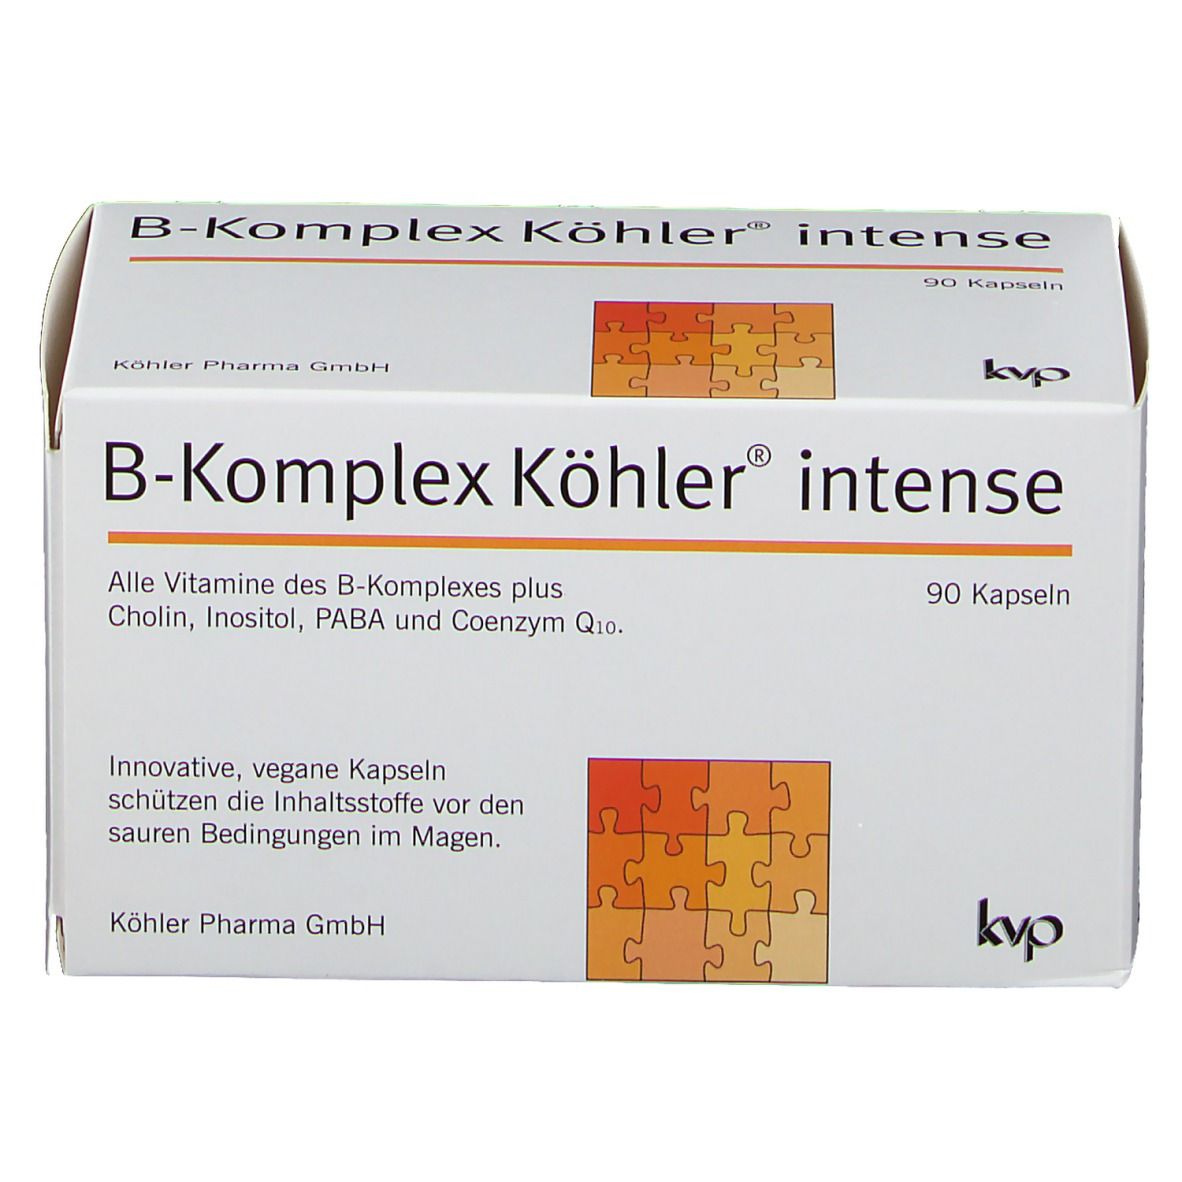 B-Komplex Köhler® intense